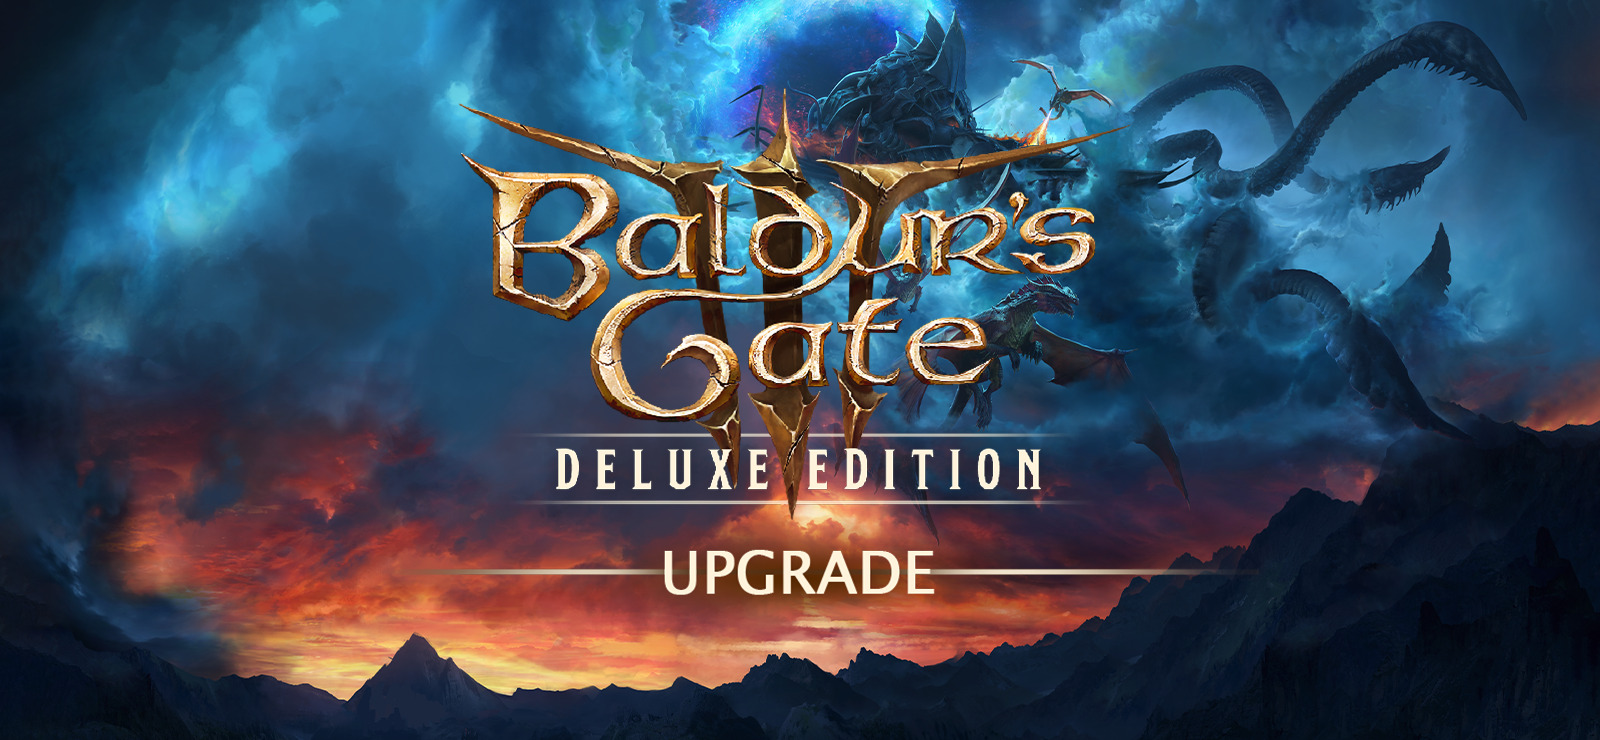 Baldur's Gate 3 - Digital Deluxe Edition upgrade on